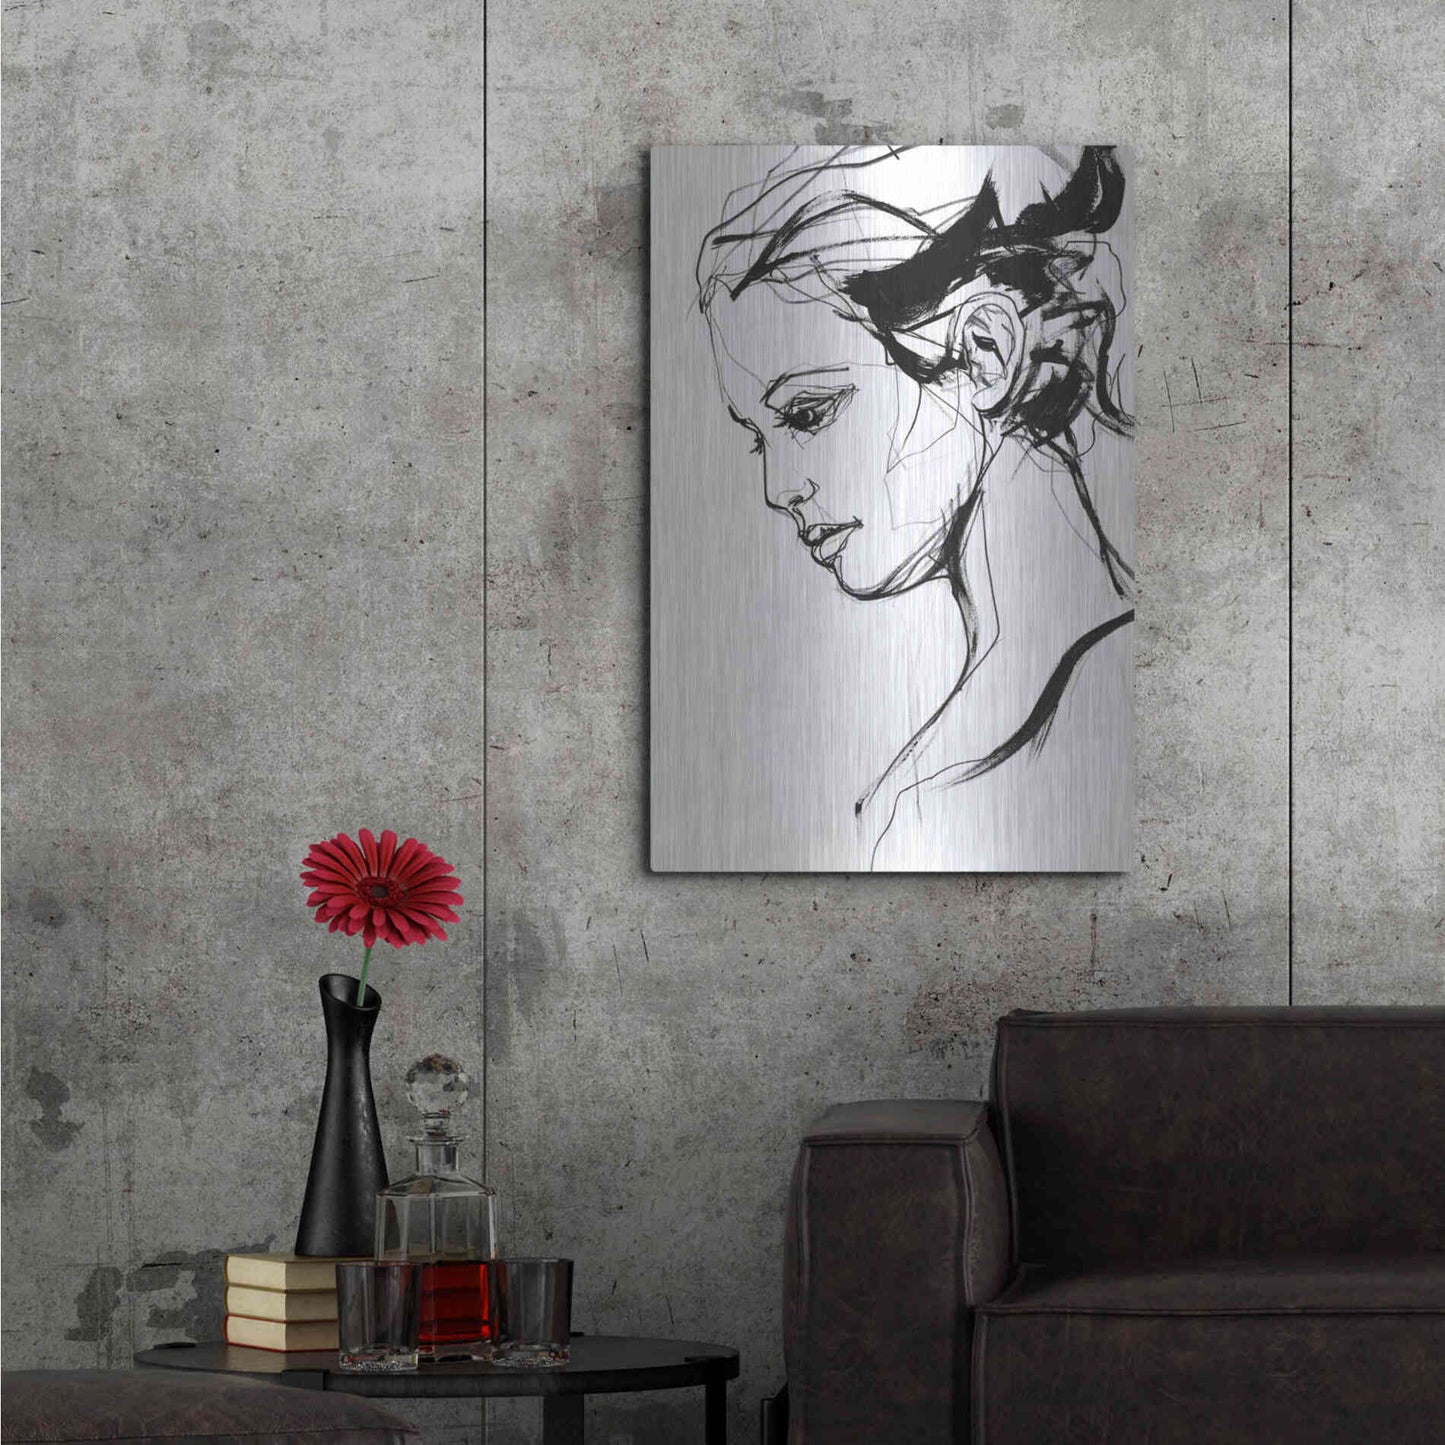 Luxe Metal Art 'Silhouette 2' by Design Fabrikken, Metal Wall Art,24x36